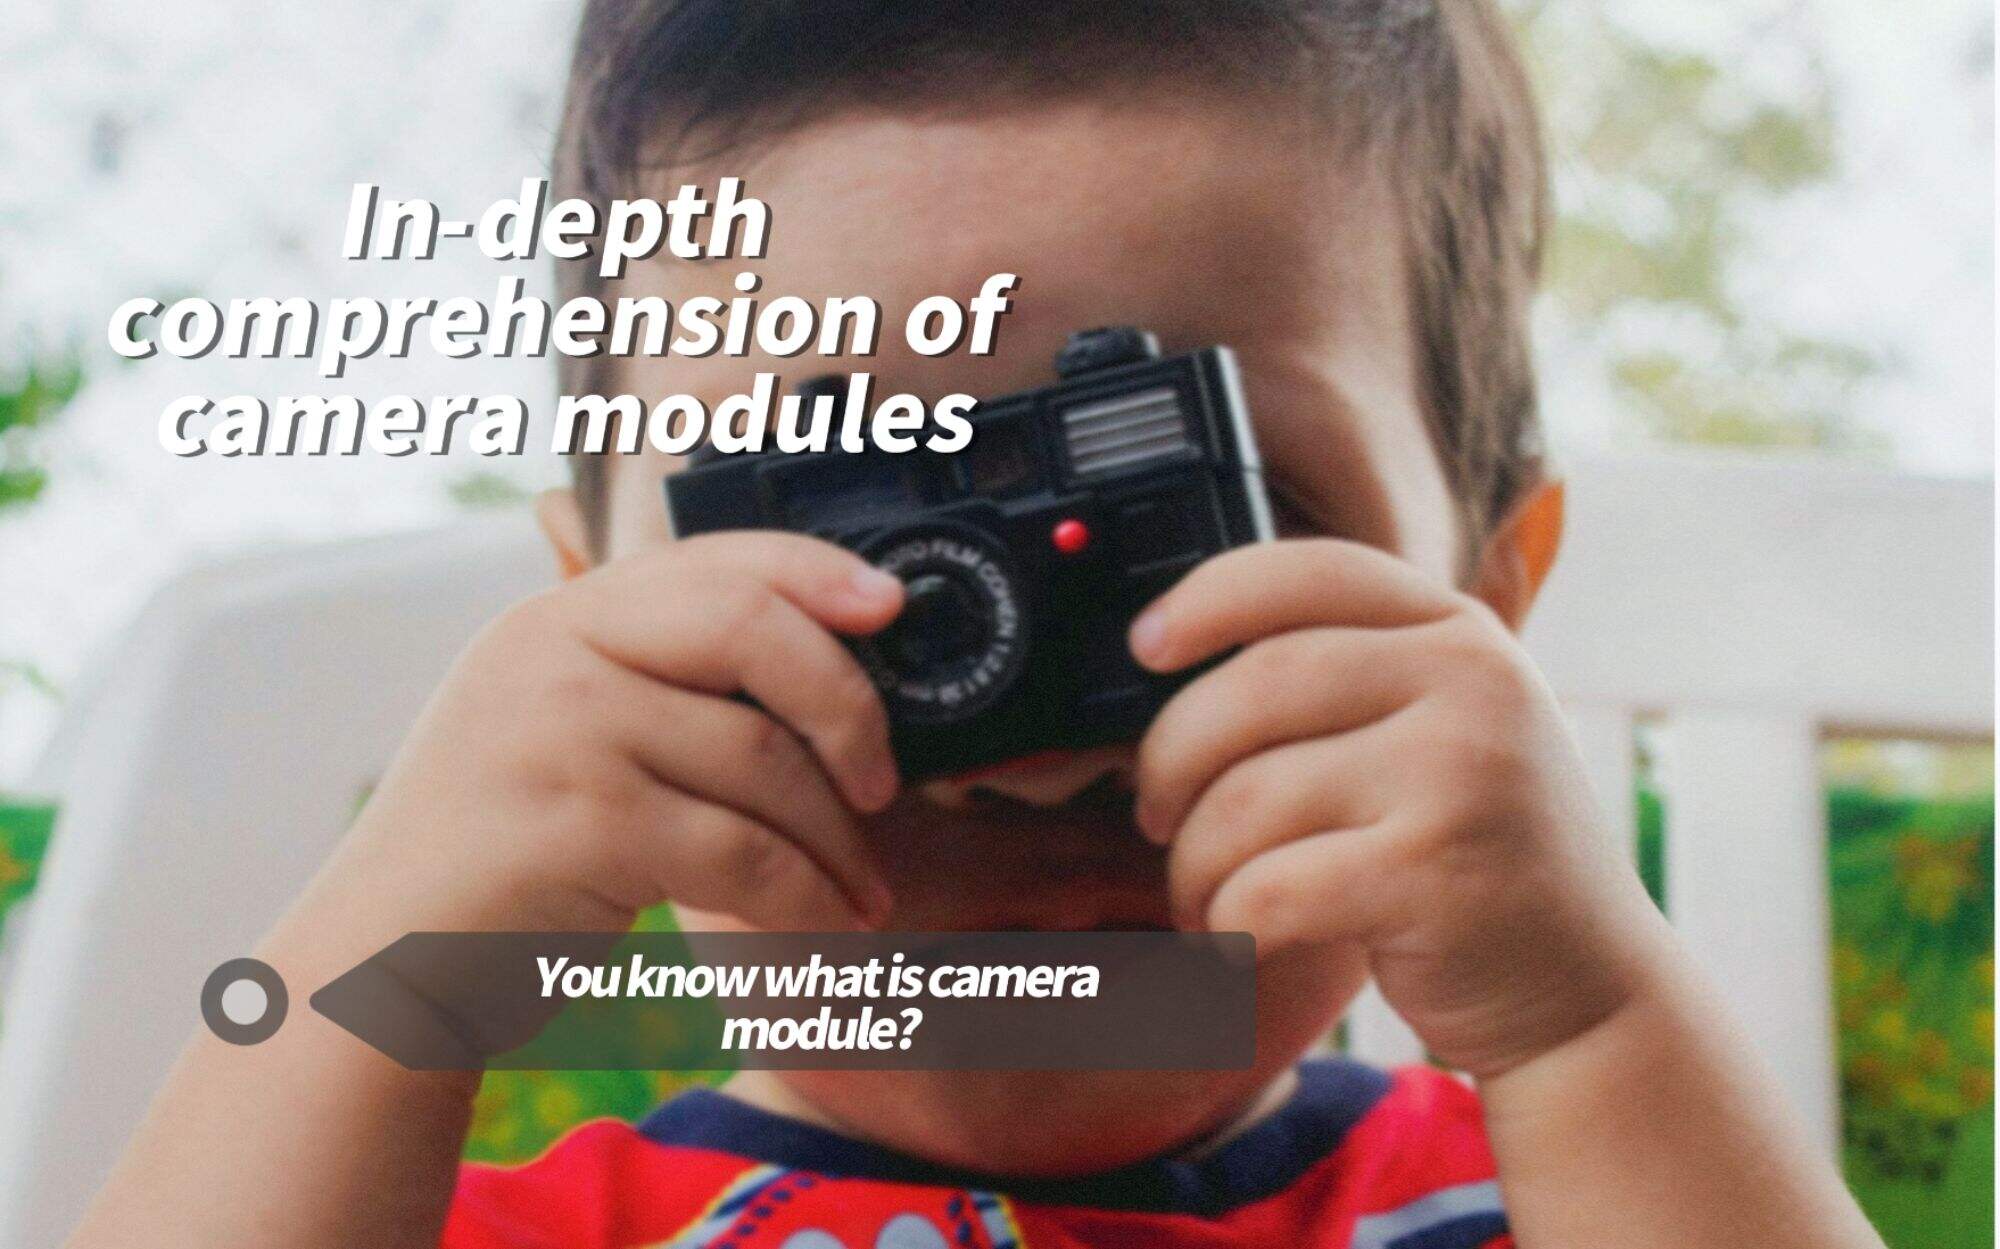 In-depth comprehension of camera modules